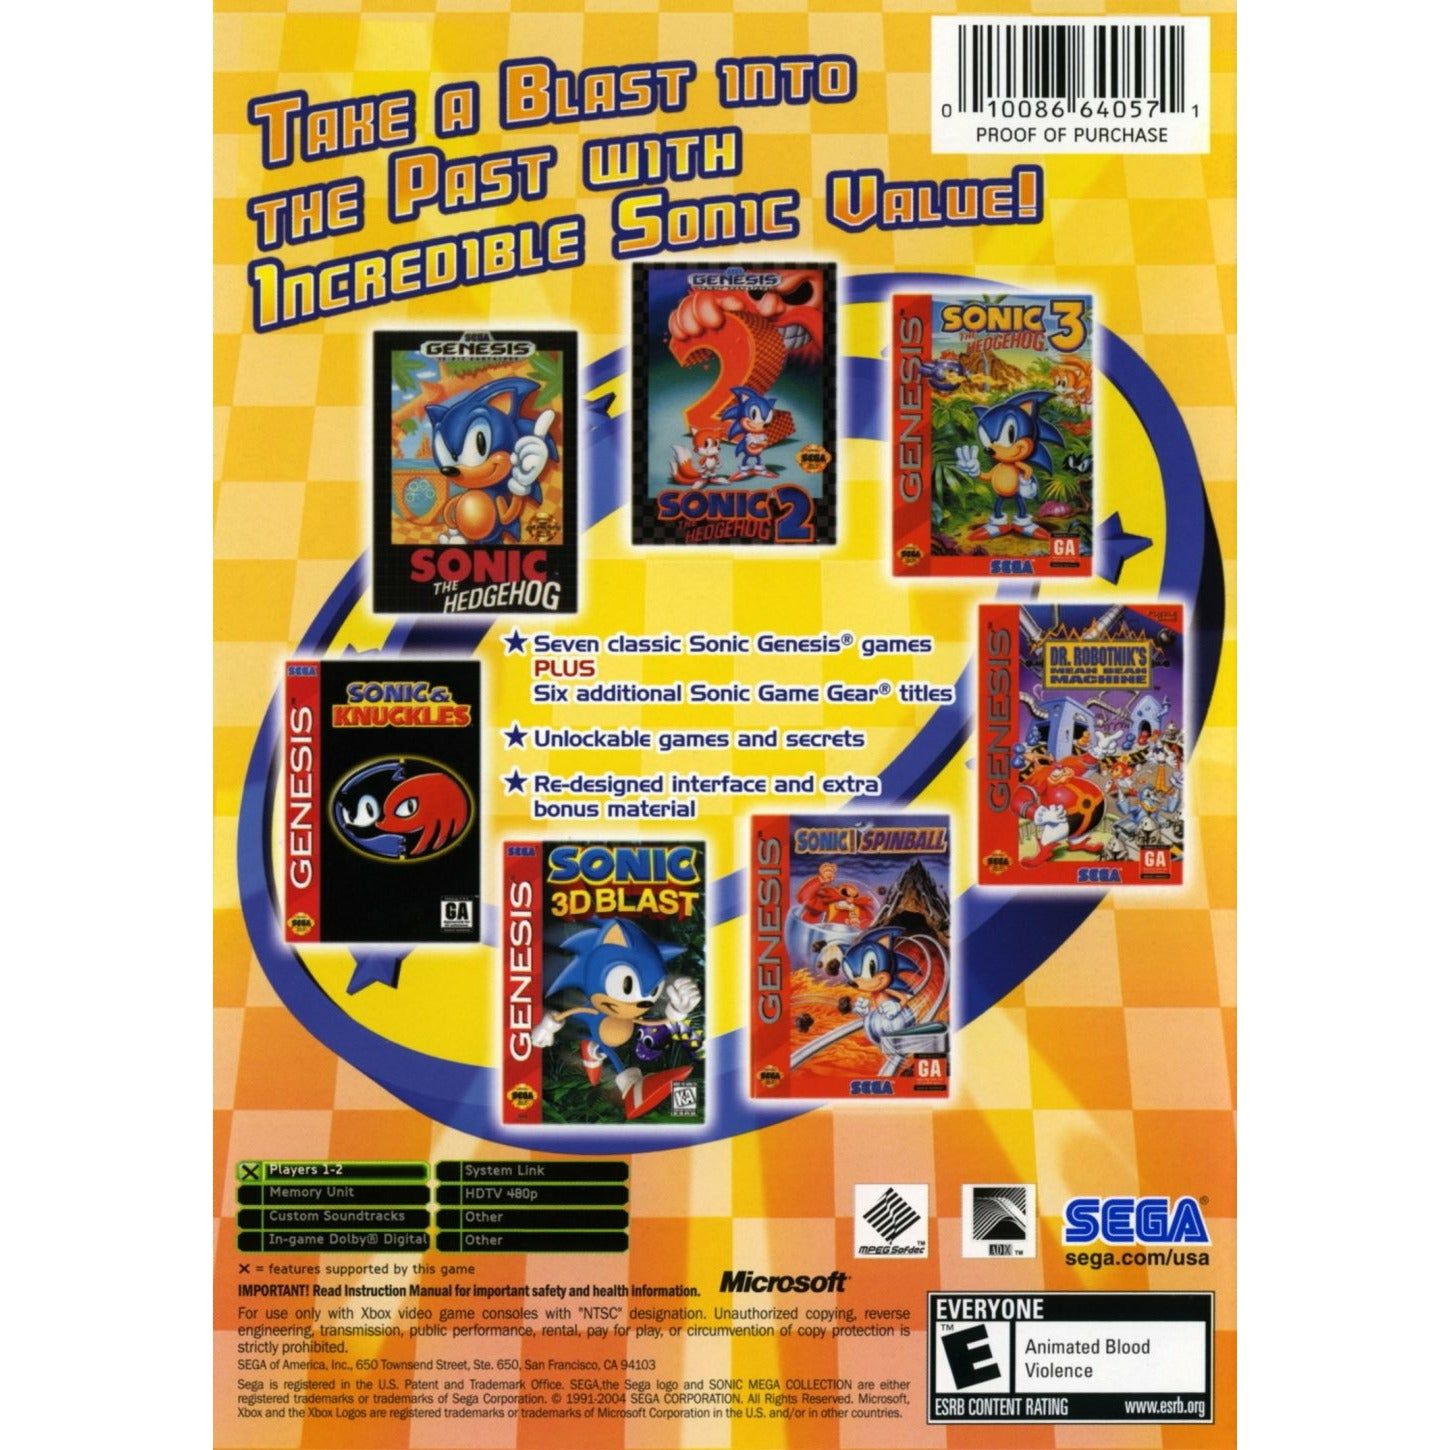 XBOX - Sonic Mega Collection Plus